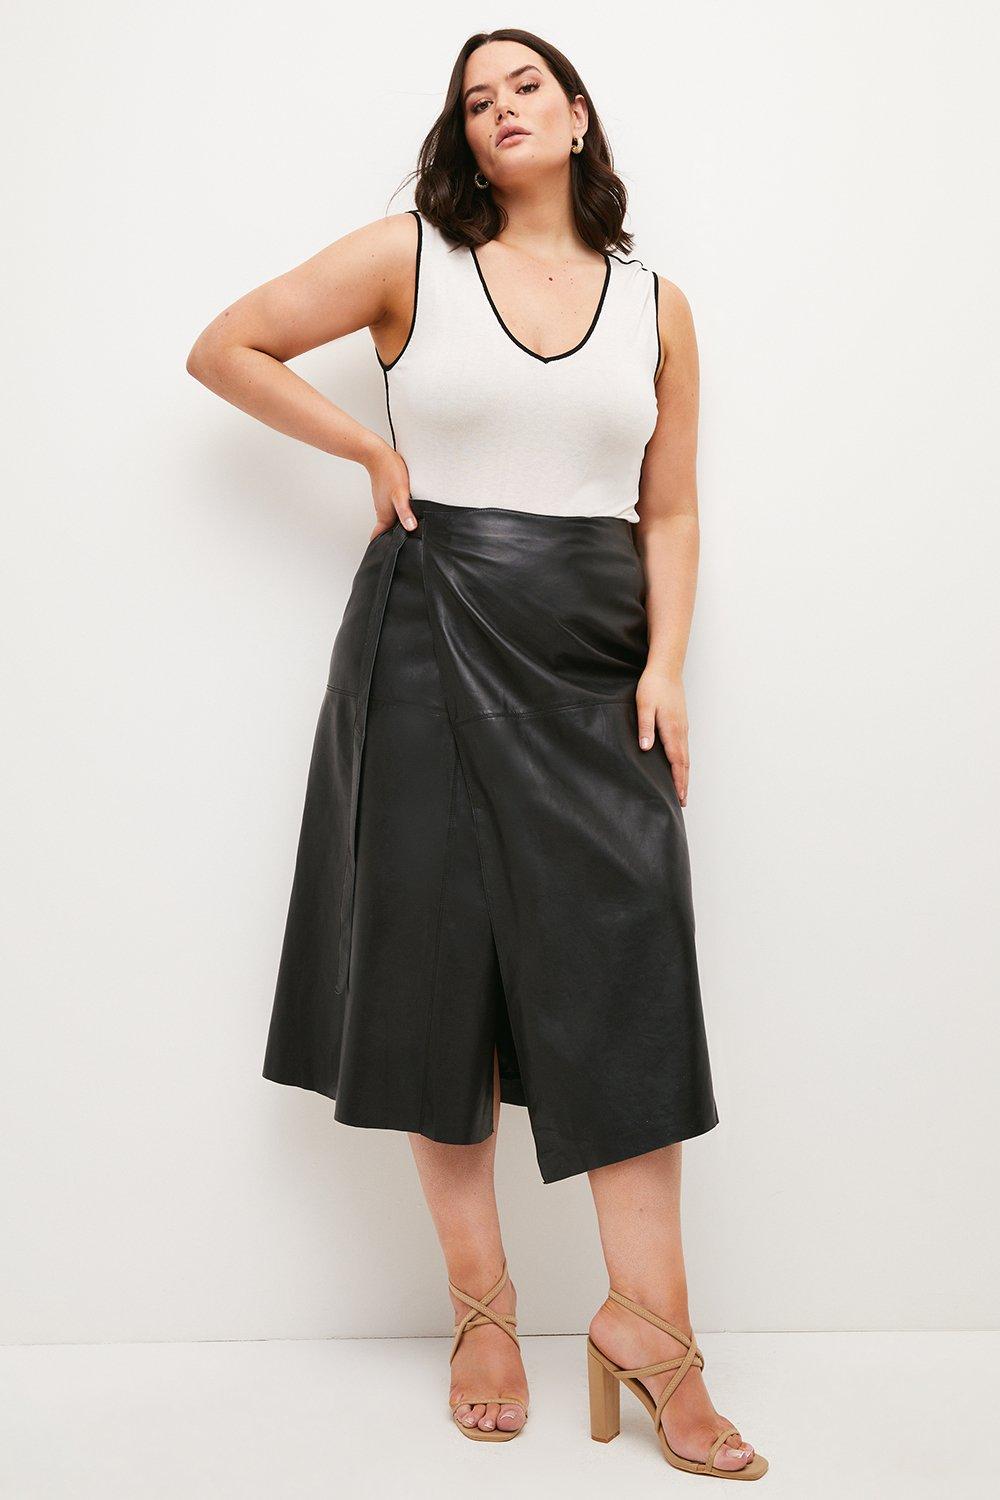 Plus Size Leather | Plus Size Leather Skirts | Karen Millen